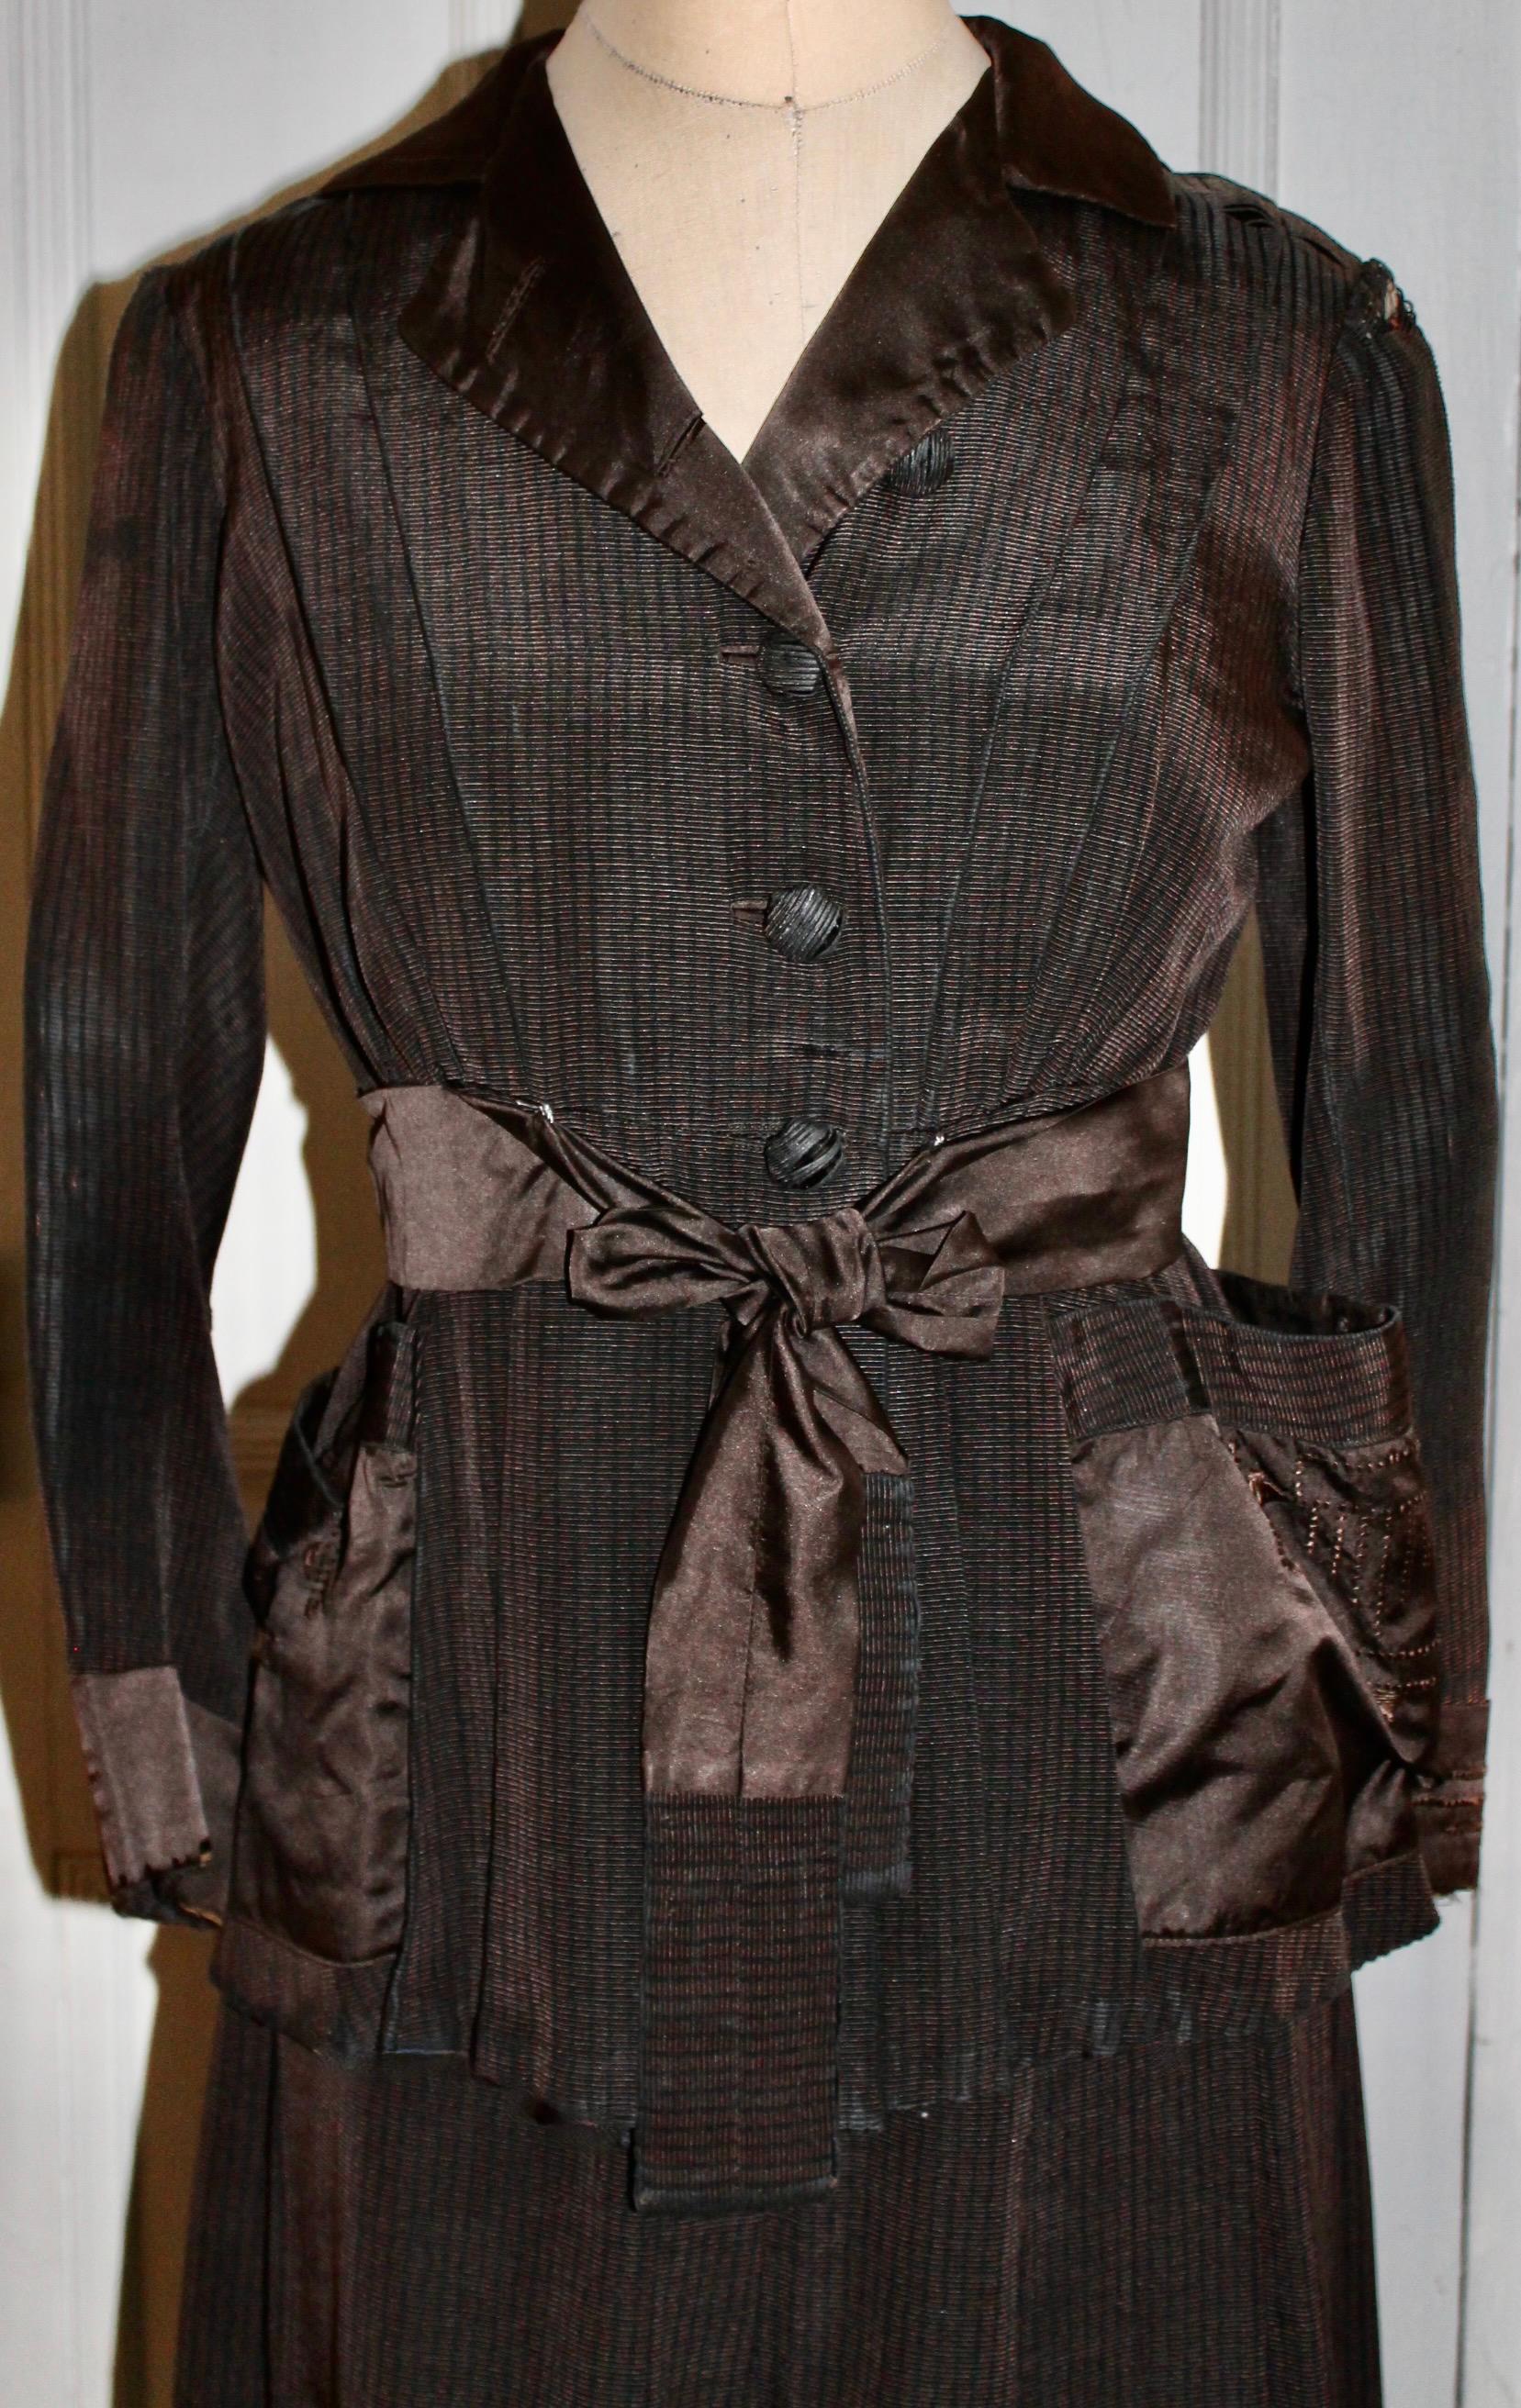 Davis & Marinsky Wiener Werkstatte Attributed Suit In Good Condition For Sale In Sharon, CT